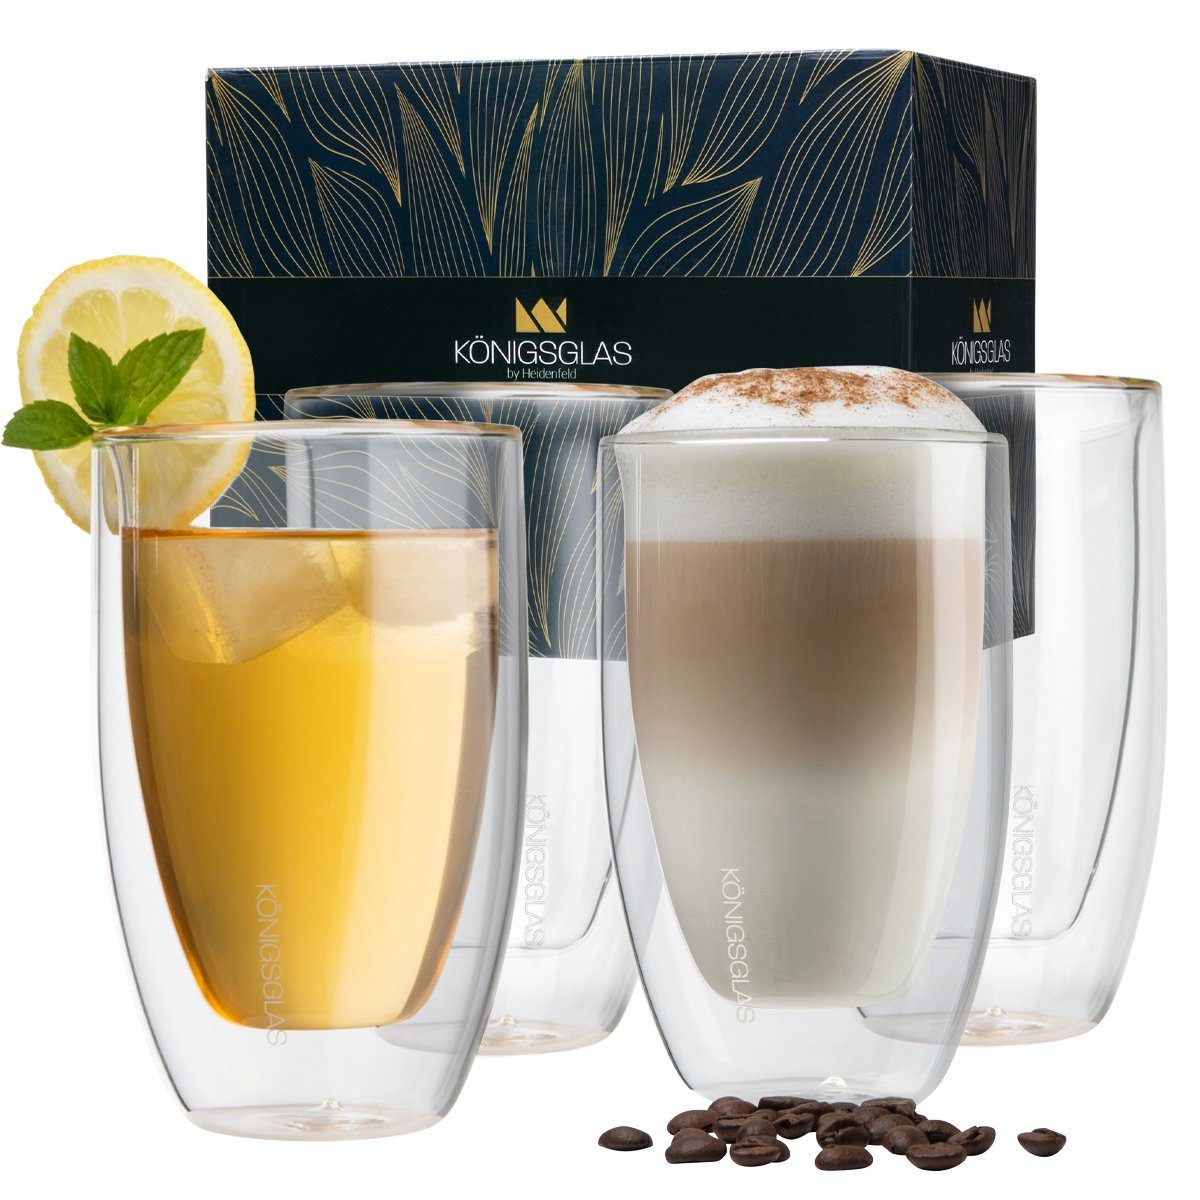 Königsglas Latte-Macchiato-Glas Latte Gläser-Set Teeglas Kaffeegläser Glas Trinkglas Thermoglas Set Macchiato doppelwandig, Cappuccino Kaffee ml 300 Kaffeetasse, Tasse 2/4er Glas